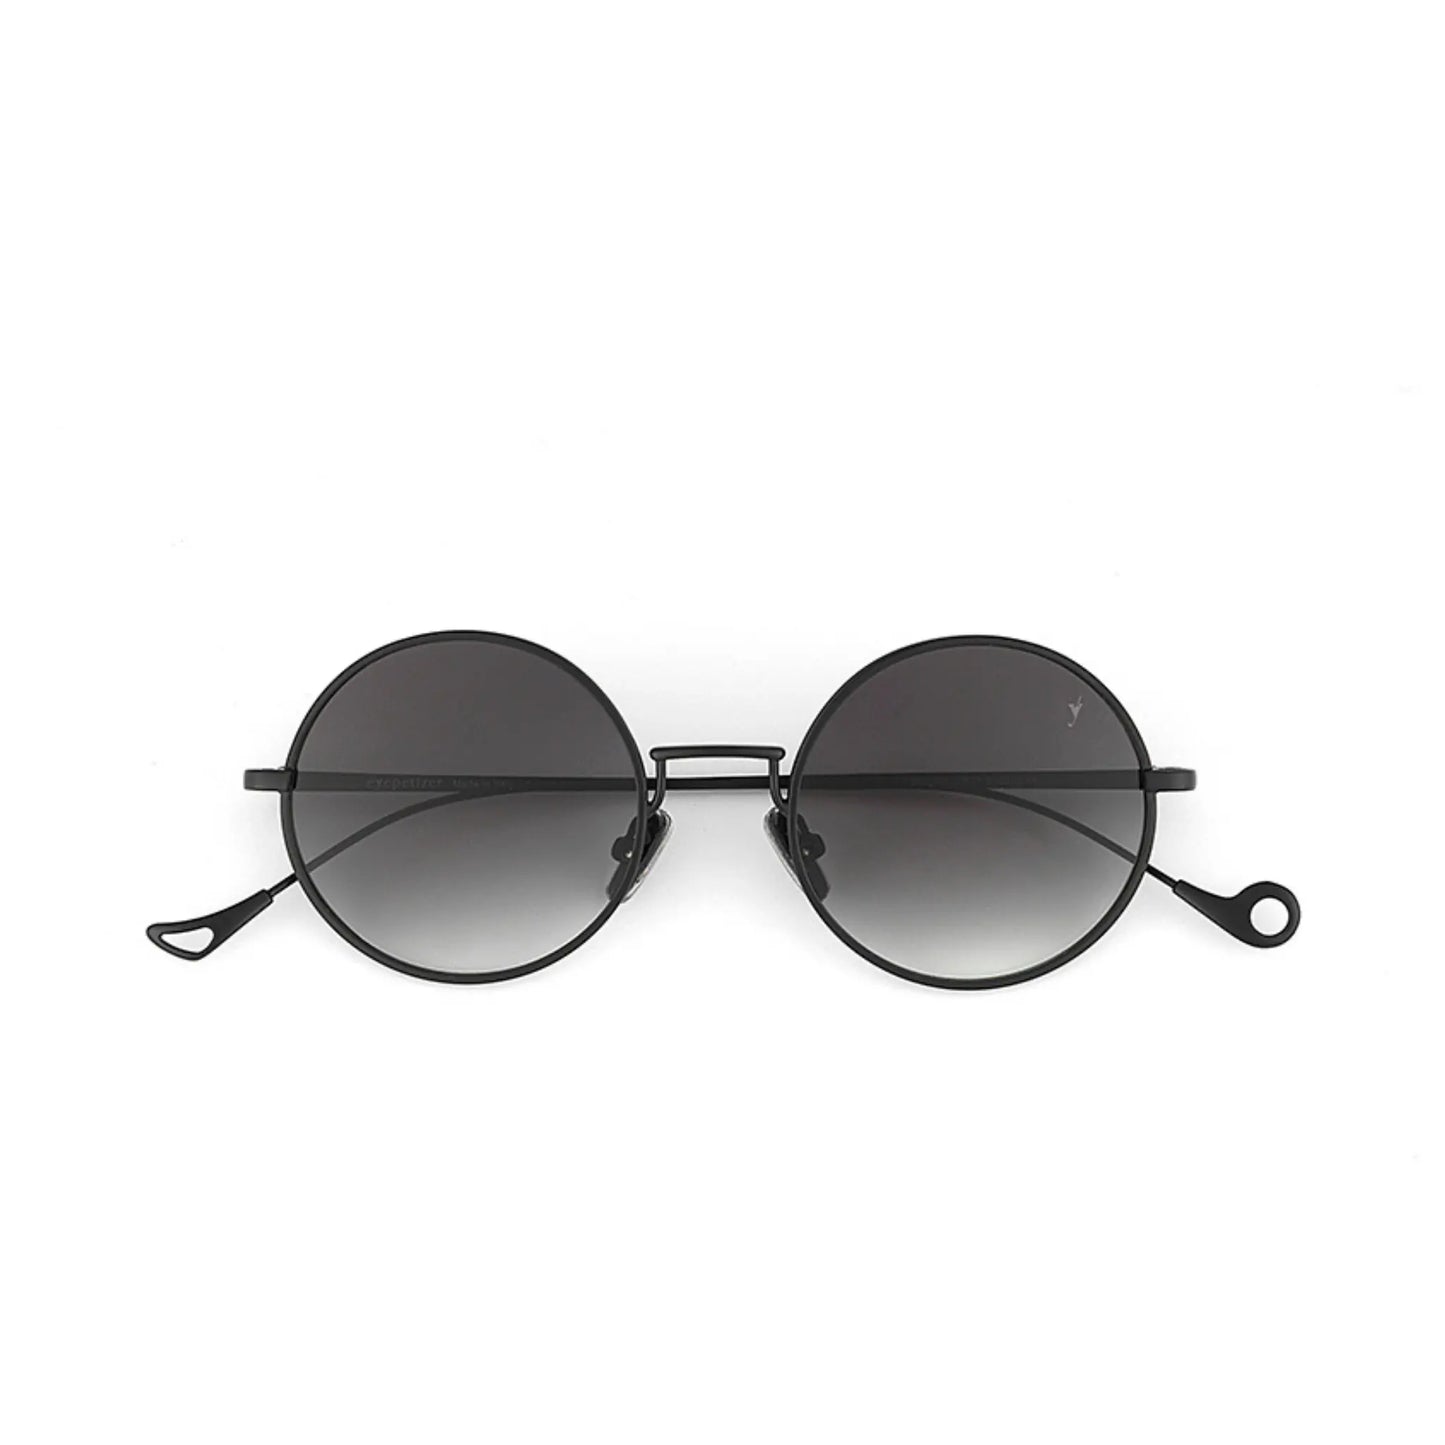 Eyepetizer sunglasses WILLIAM C.6-27-01